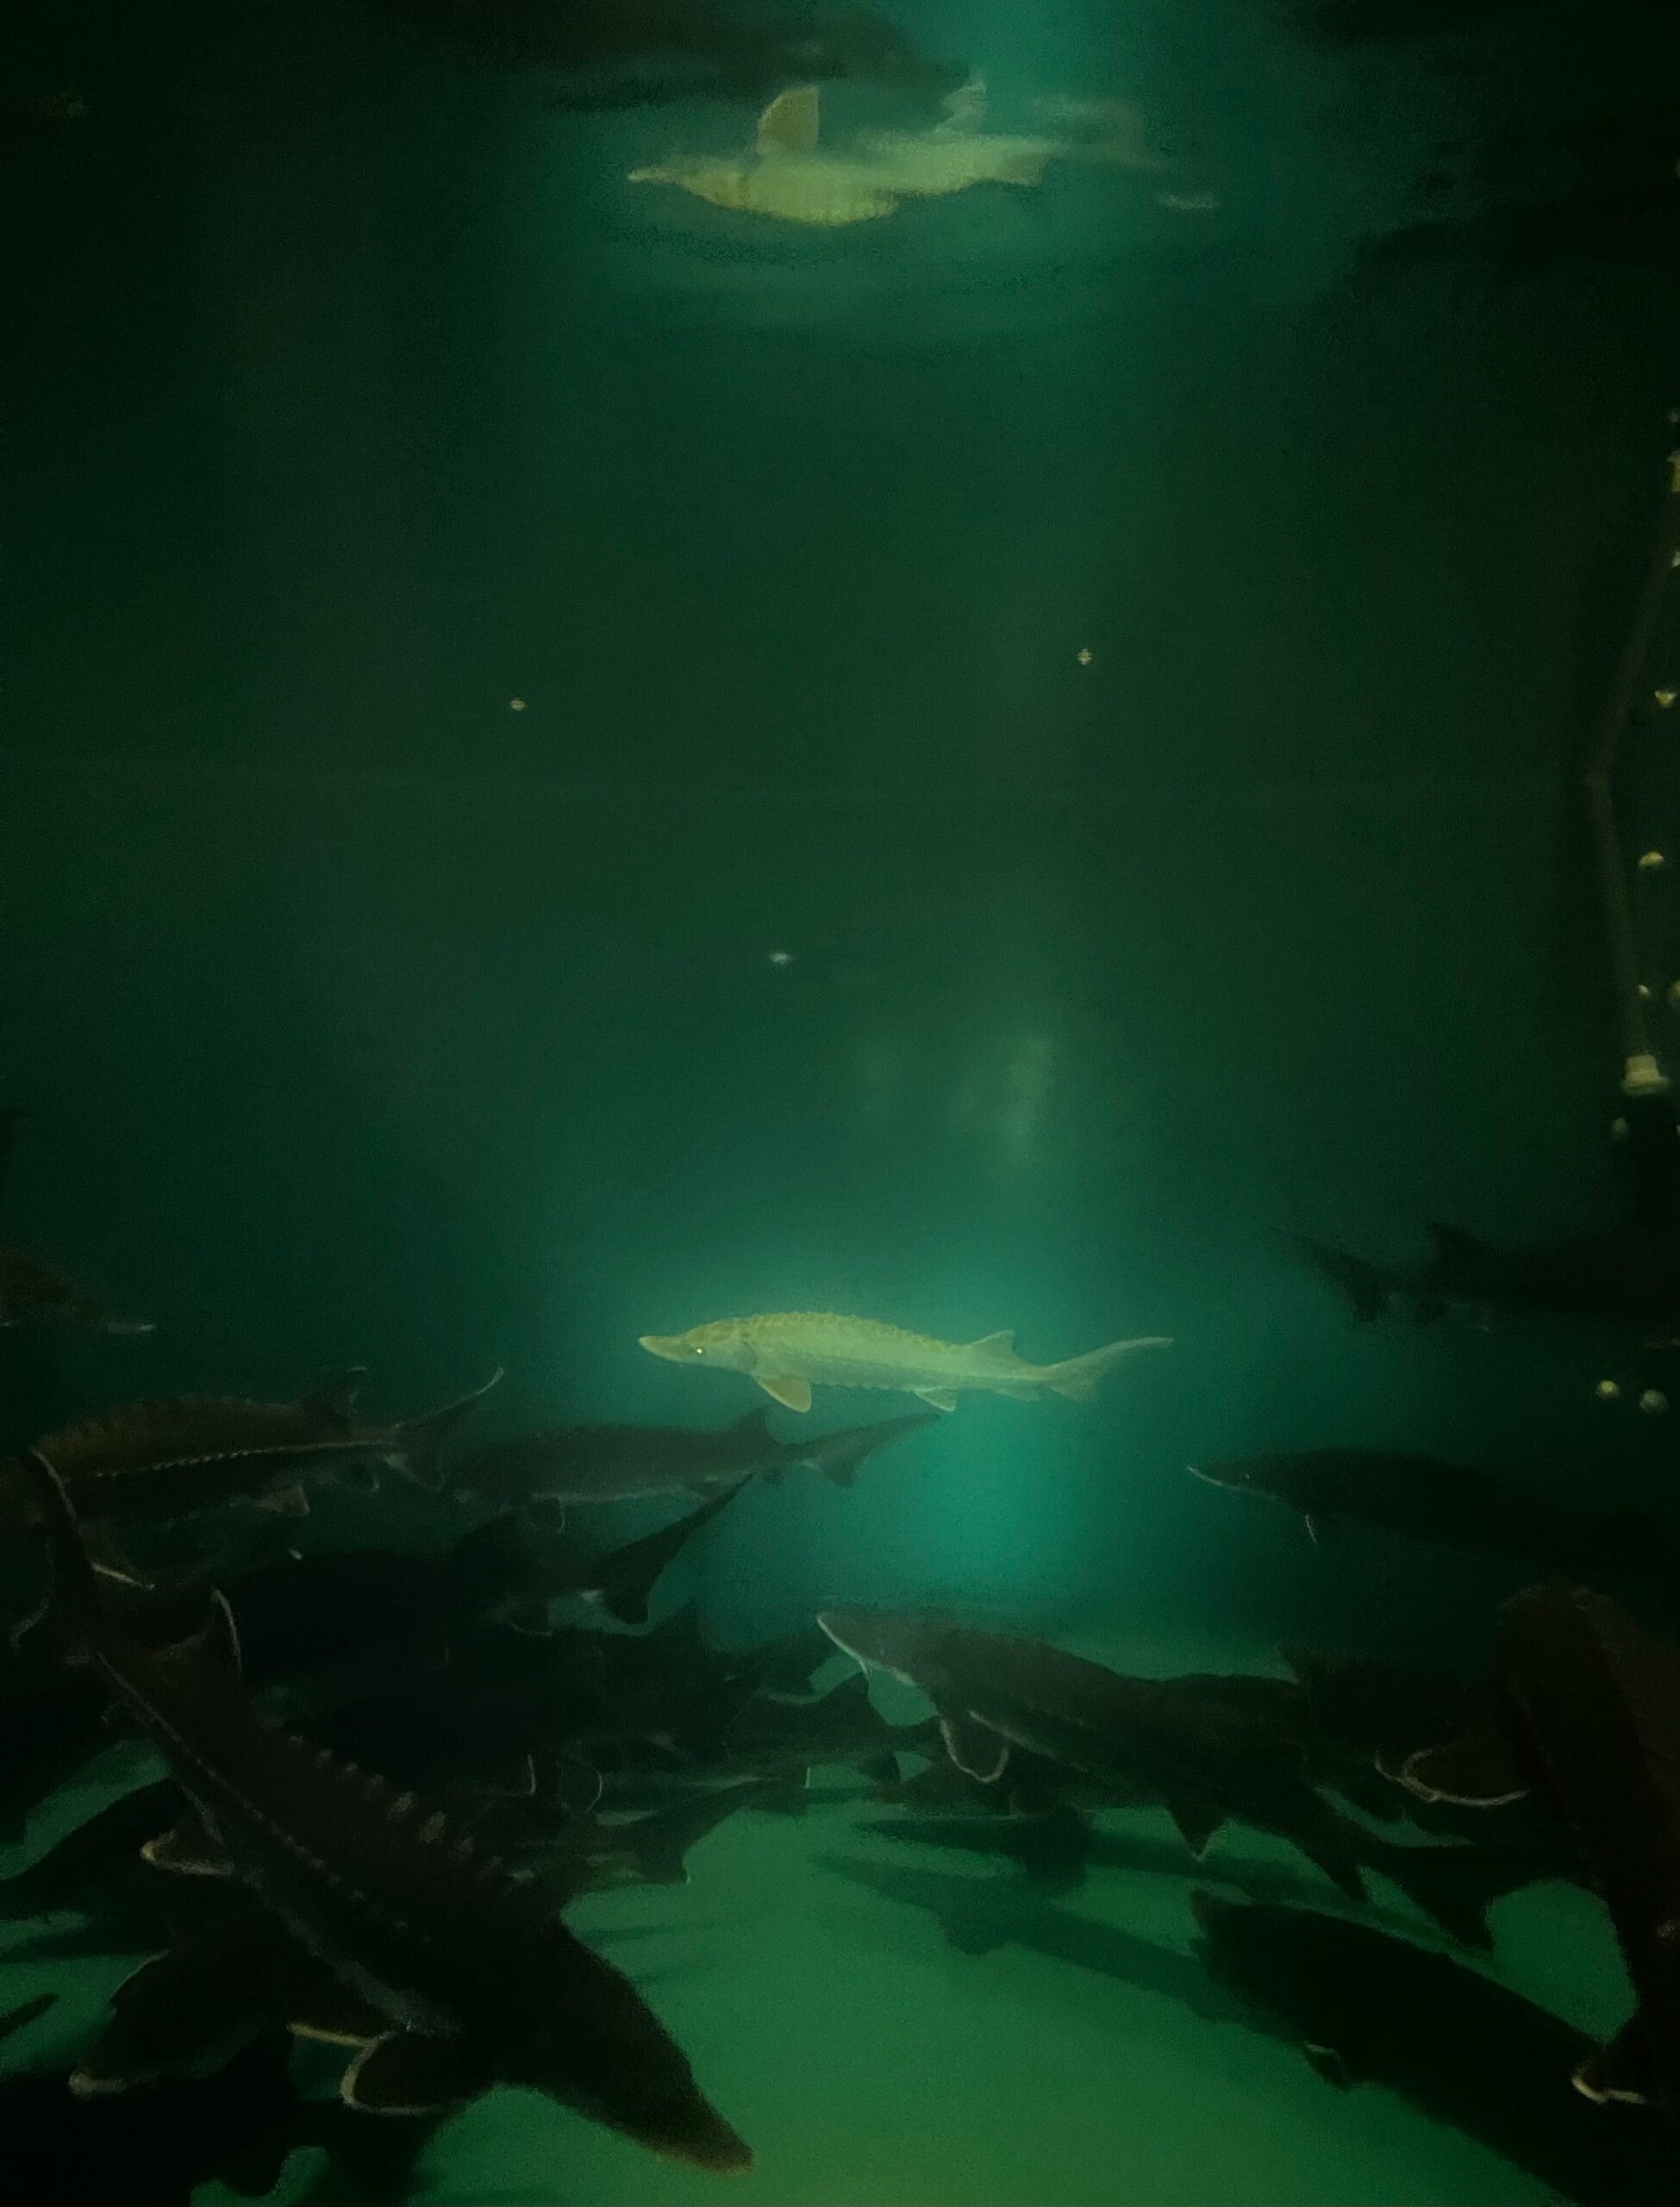 Many small sturgeon swim around a dark green tank with very little light filtering in